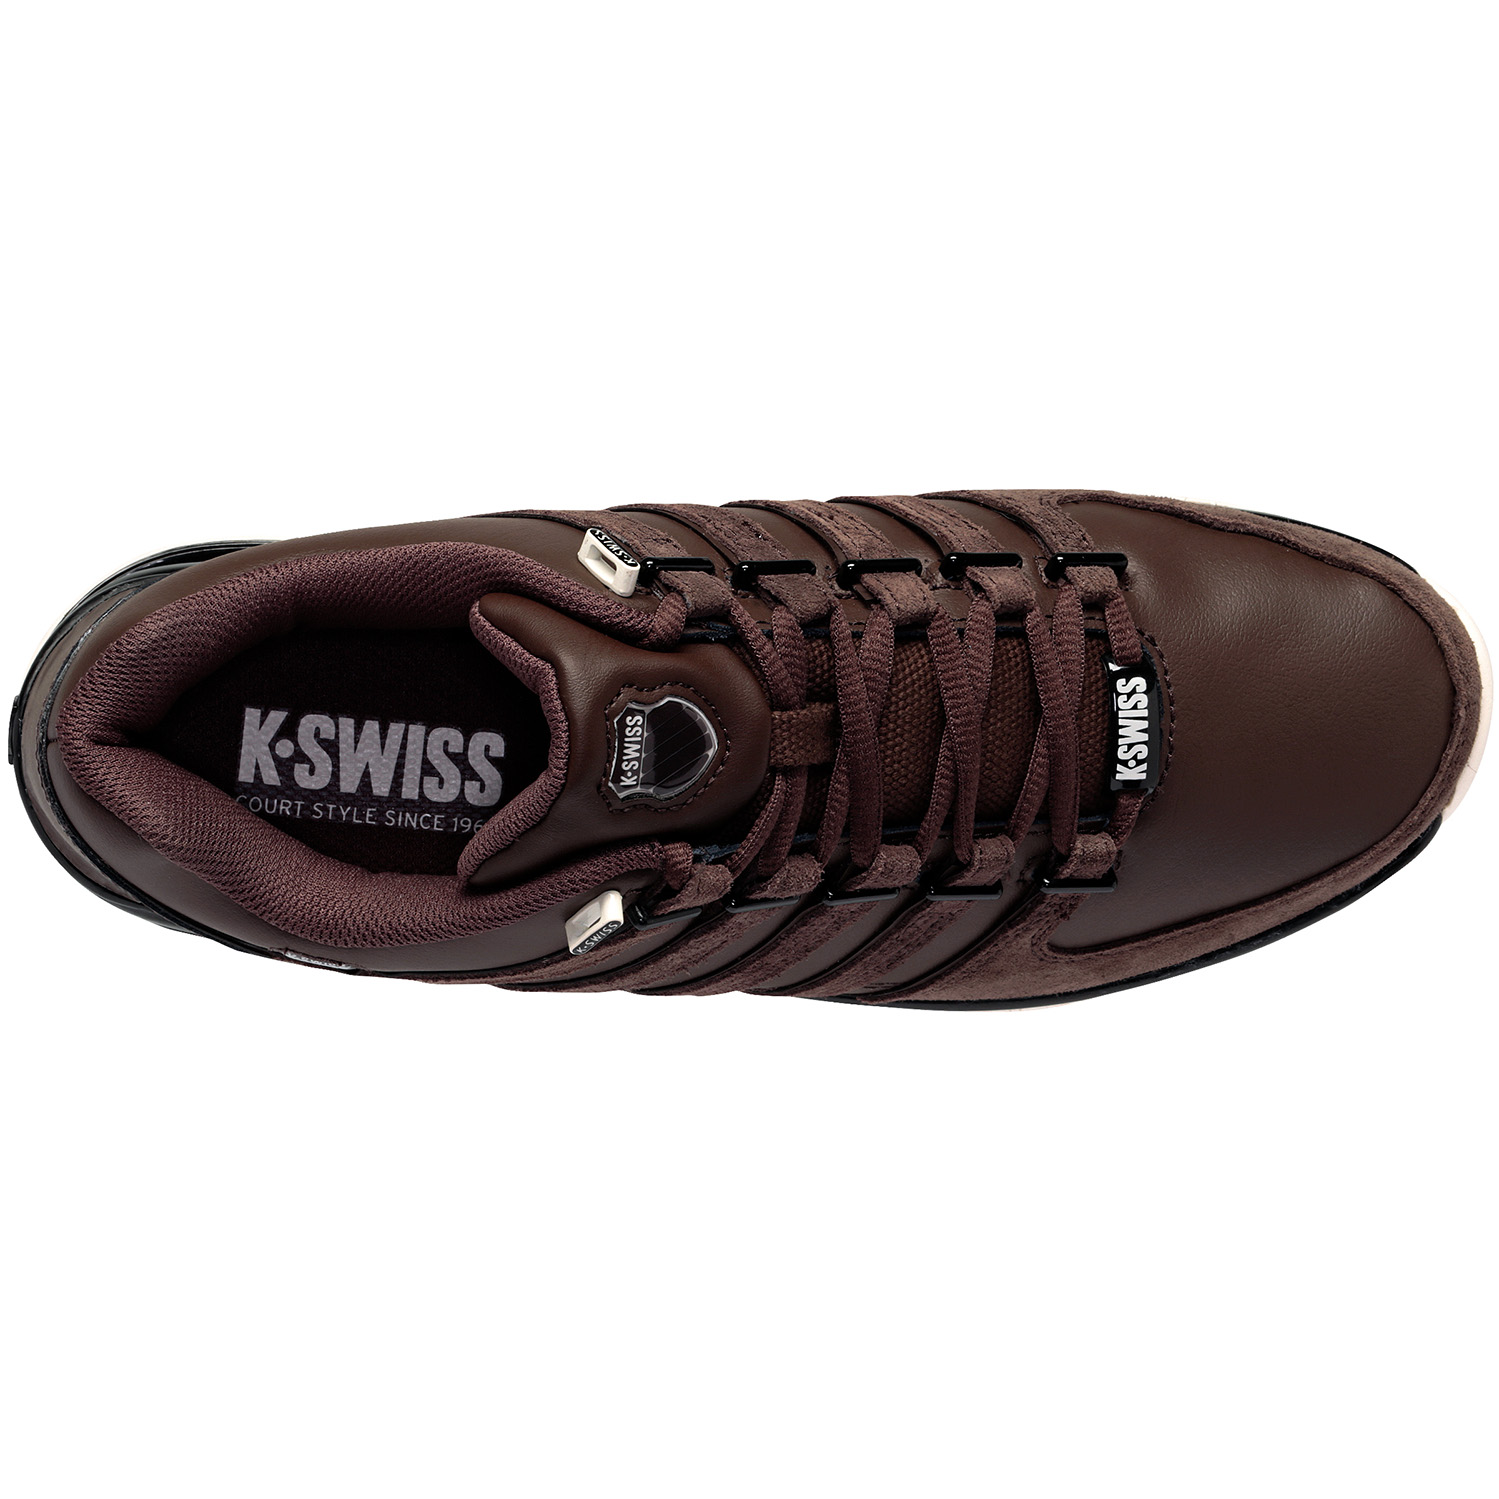 K-Swiss Rinzler Herren Sneaker Sportschuh 01235-280-M braun